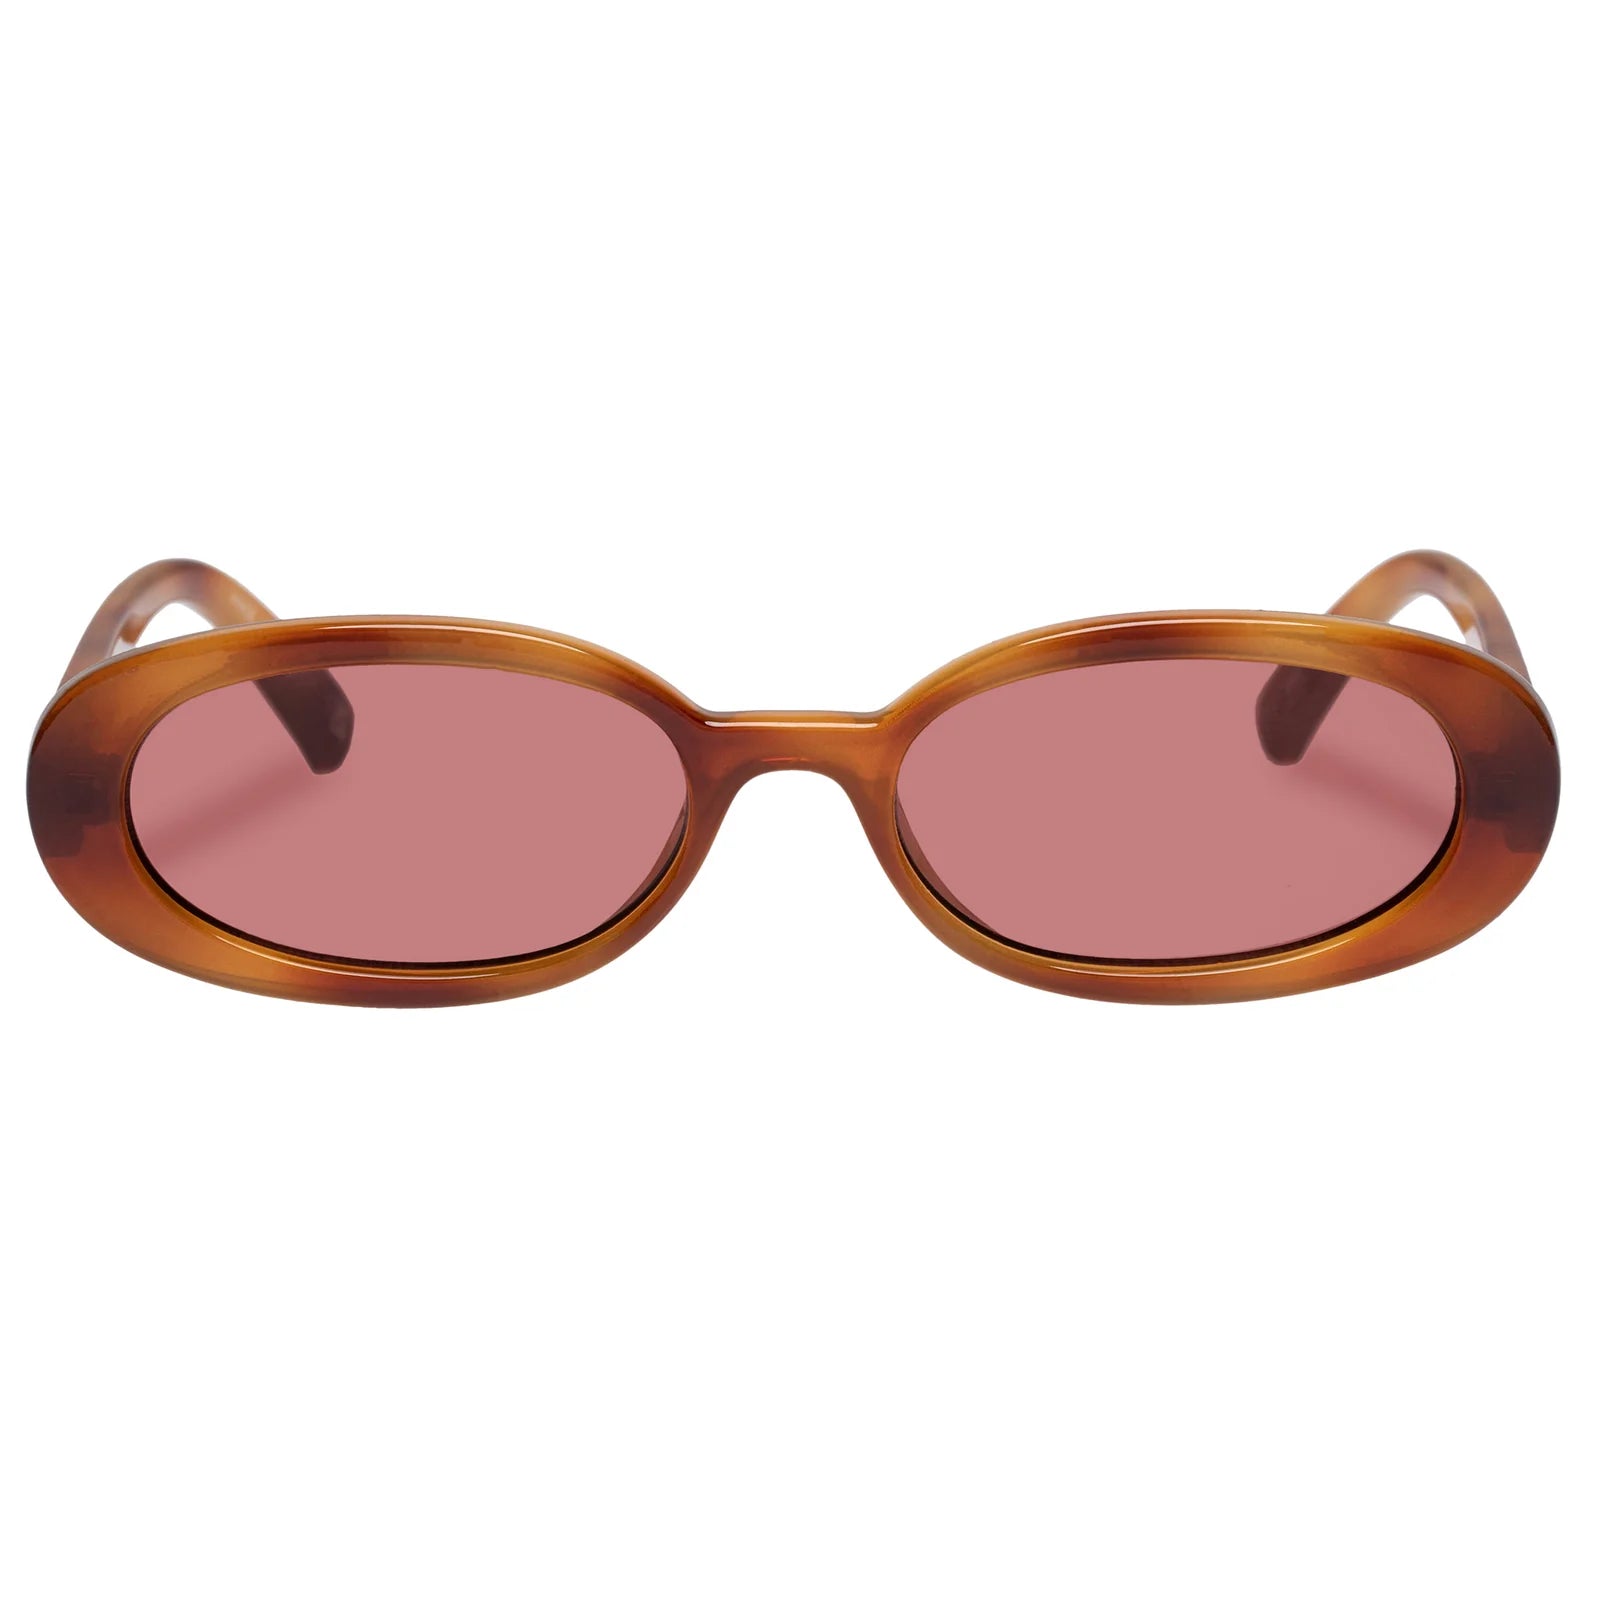 Le Specs Sunglasses - Outta Love Sunglasses - Vintage Tortoiseshell